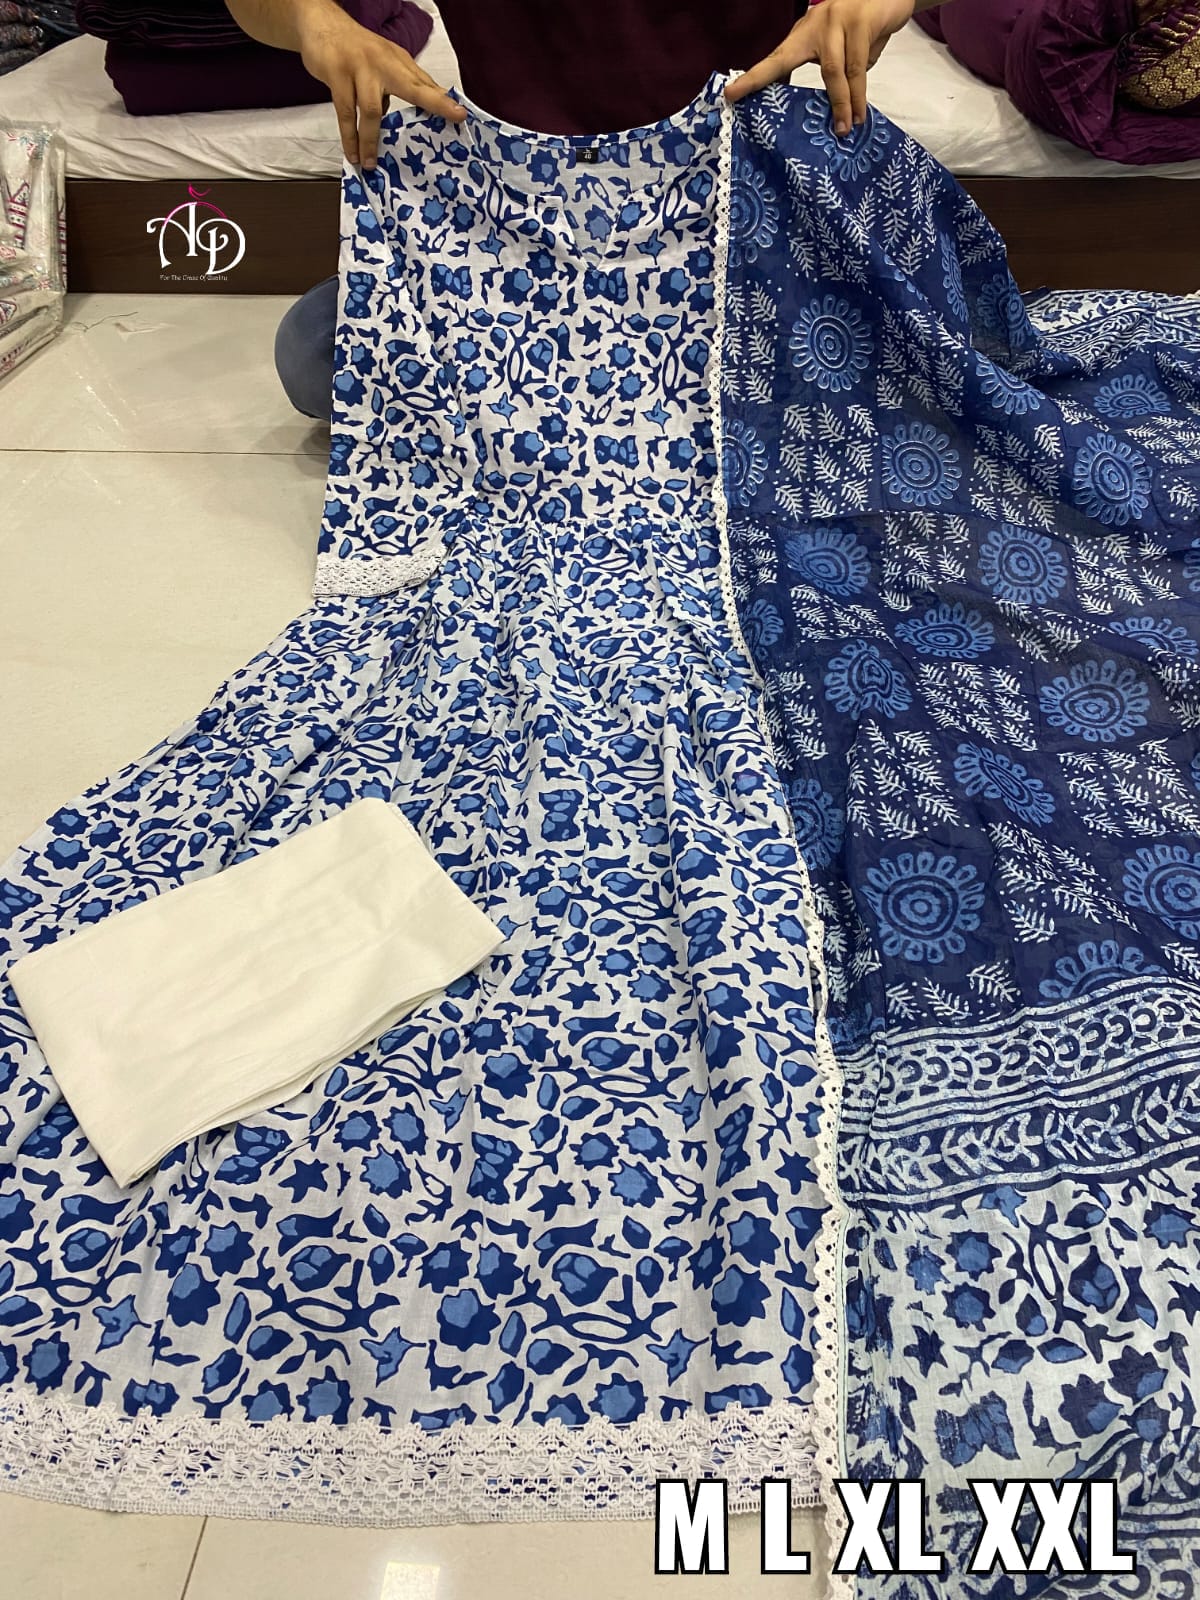 Sky Blue Color Heavy Designer Salwar Suit Buy Now